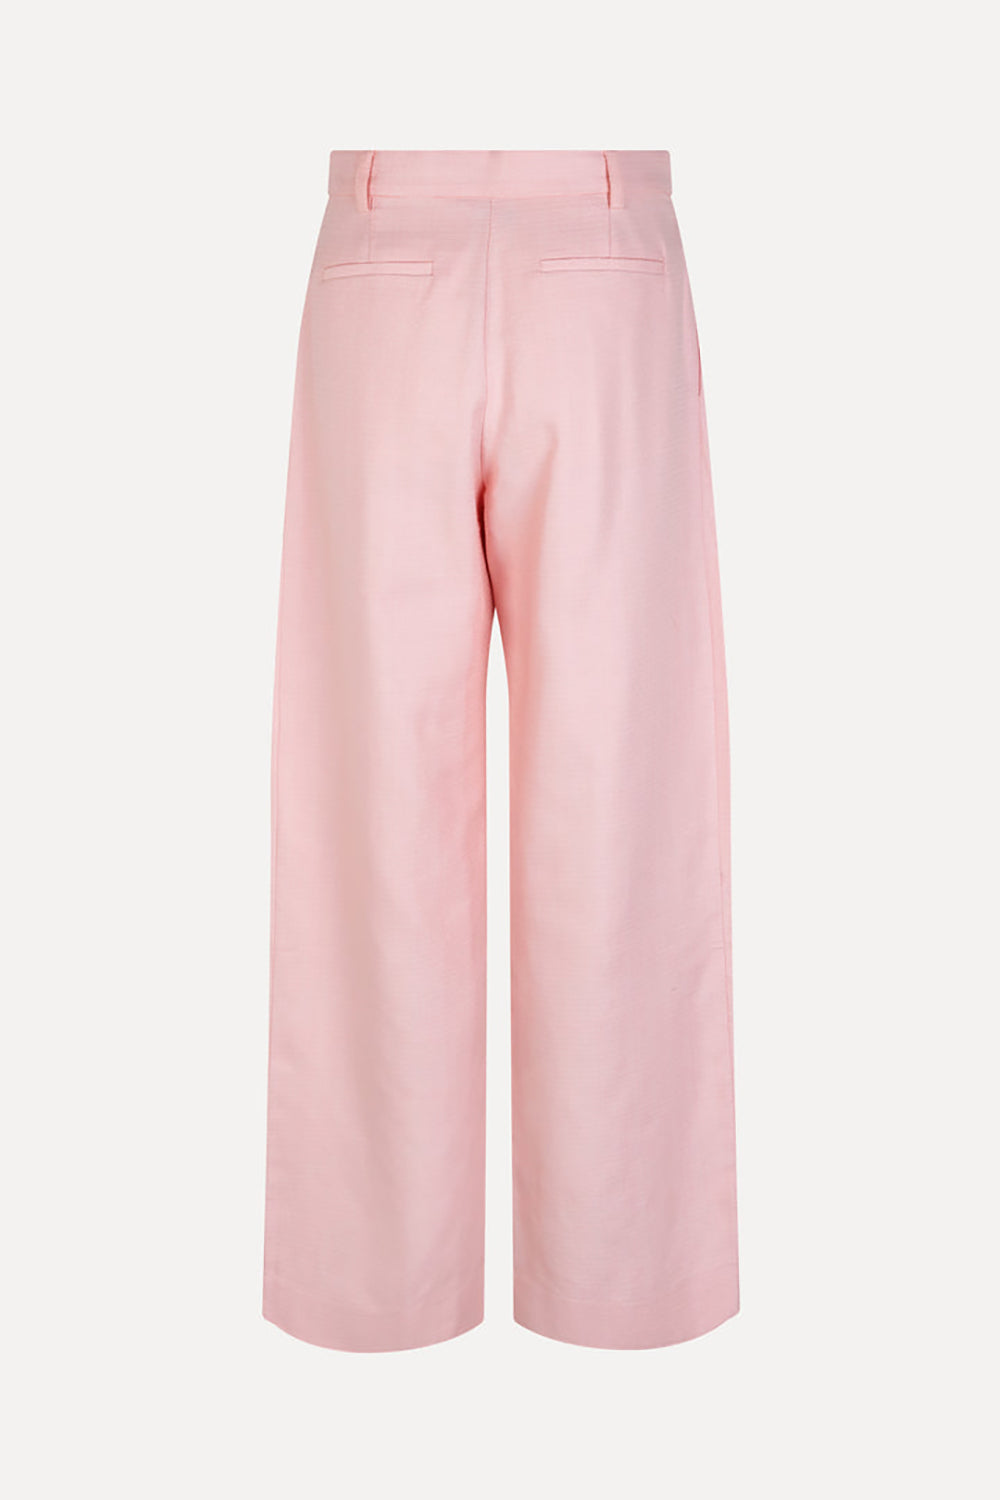 Womens Trouser | Stine Goya Jesabell pant | The Standard Store